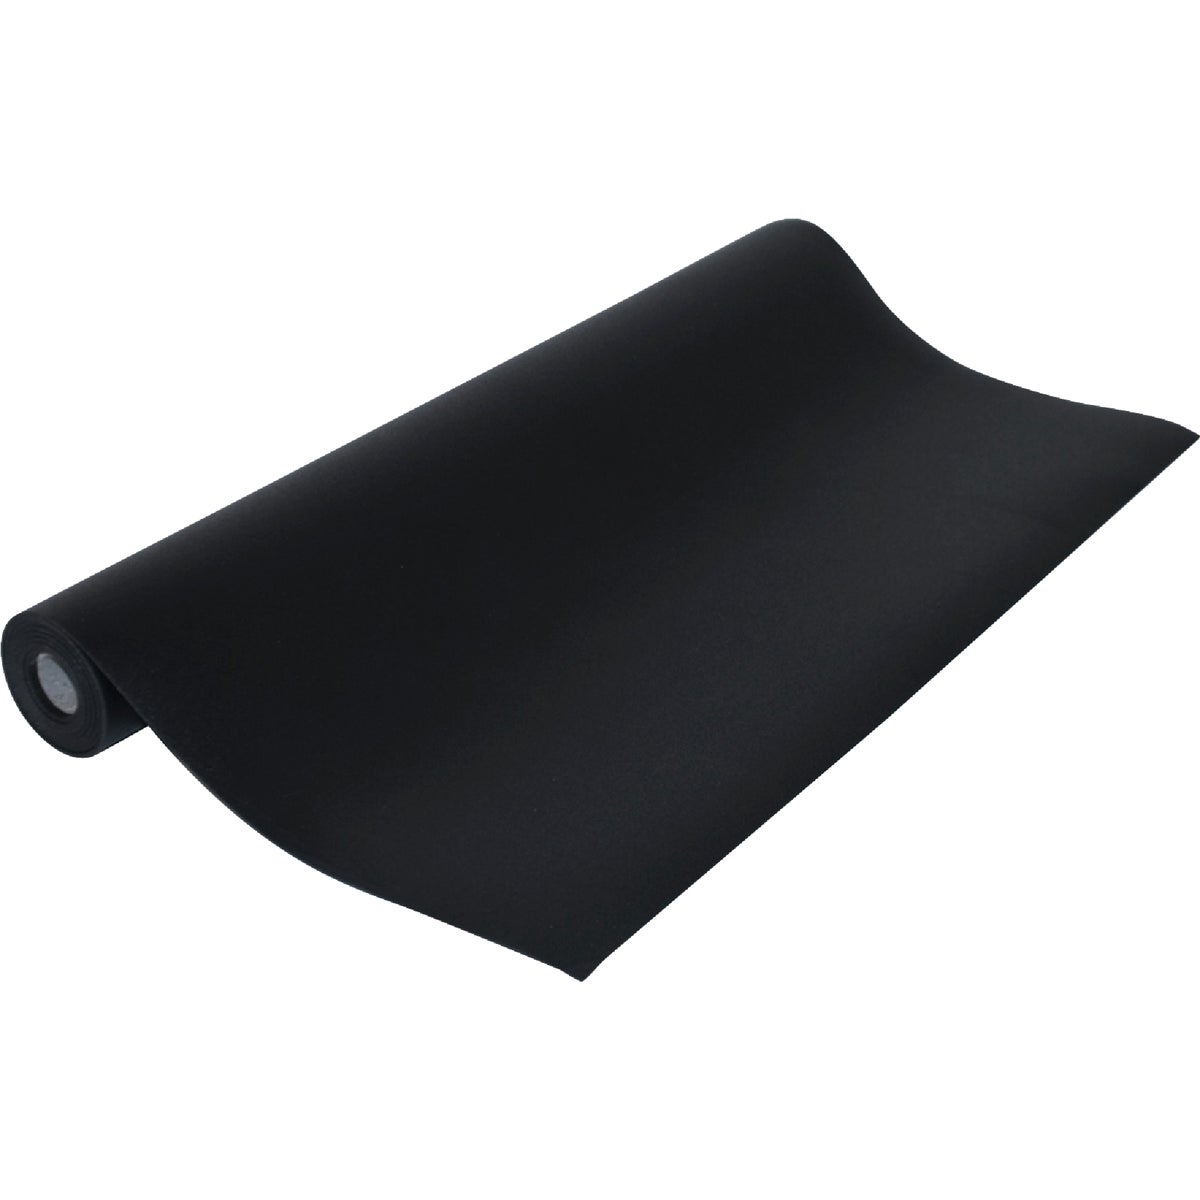 Con-Tact 04F-C6U51-01 Con-Tact 18 In. x 4 Ft. Black Grip Premium Non-Adhesive Shelf Liner 04F-C6U51-01